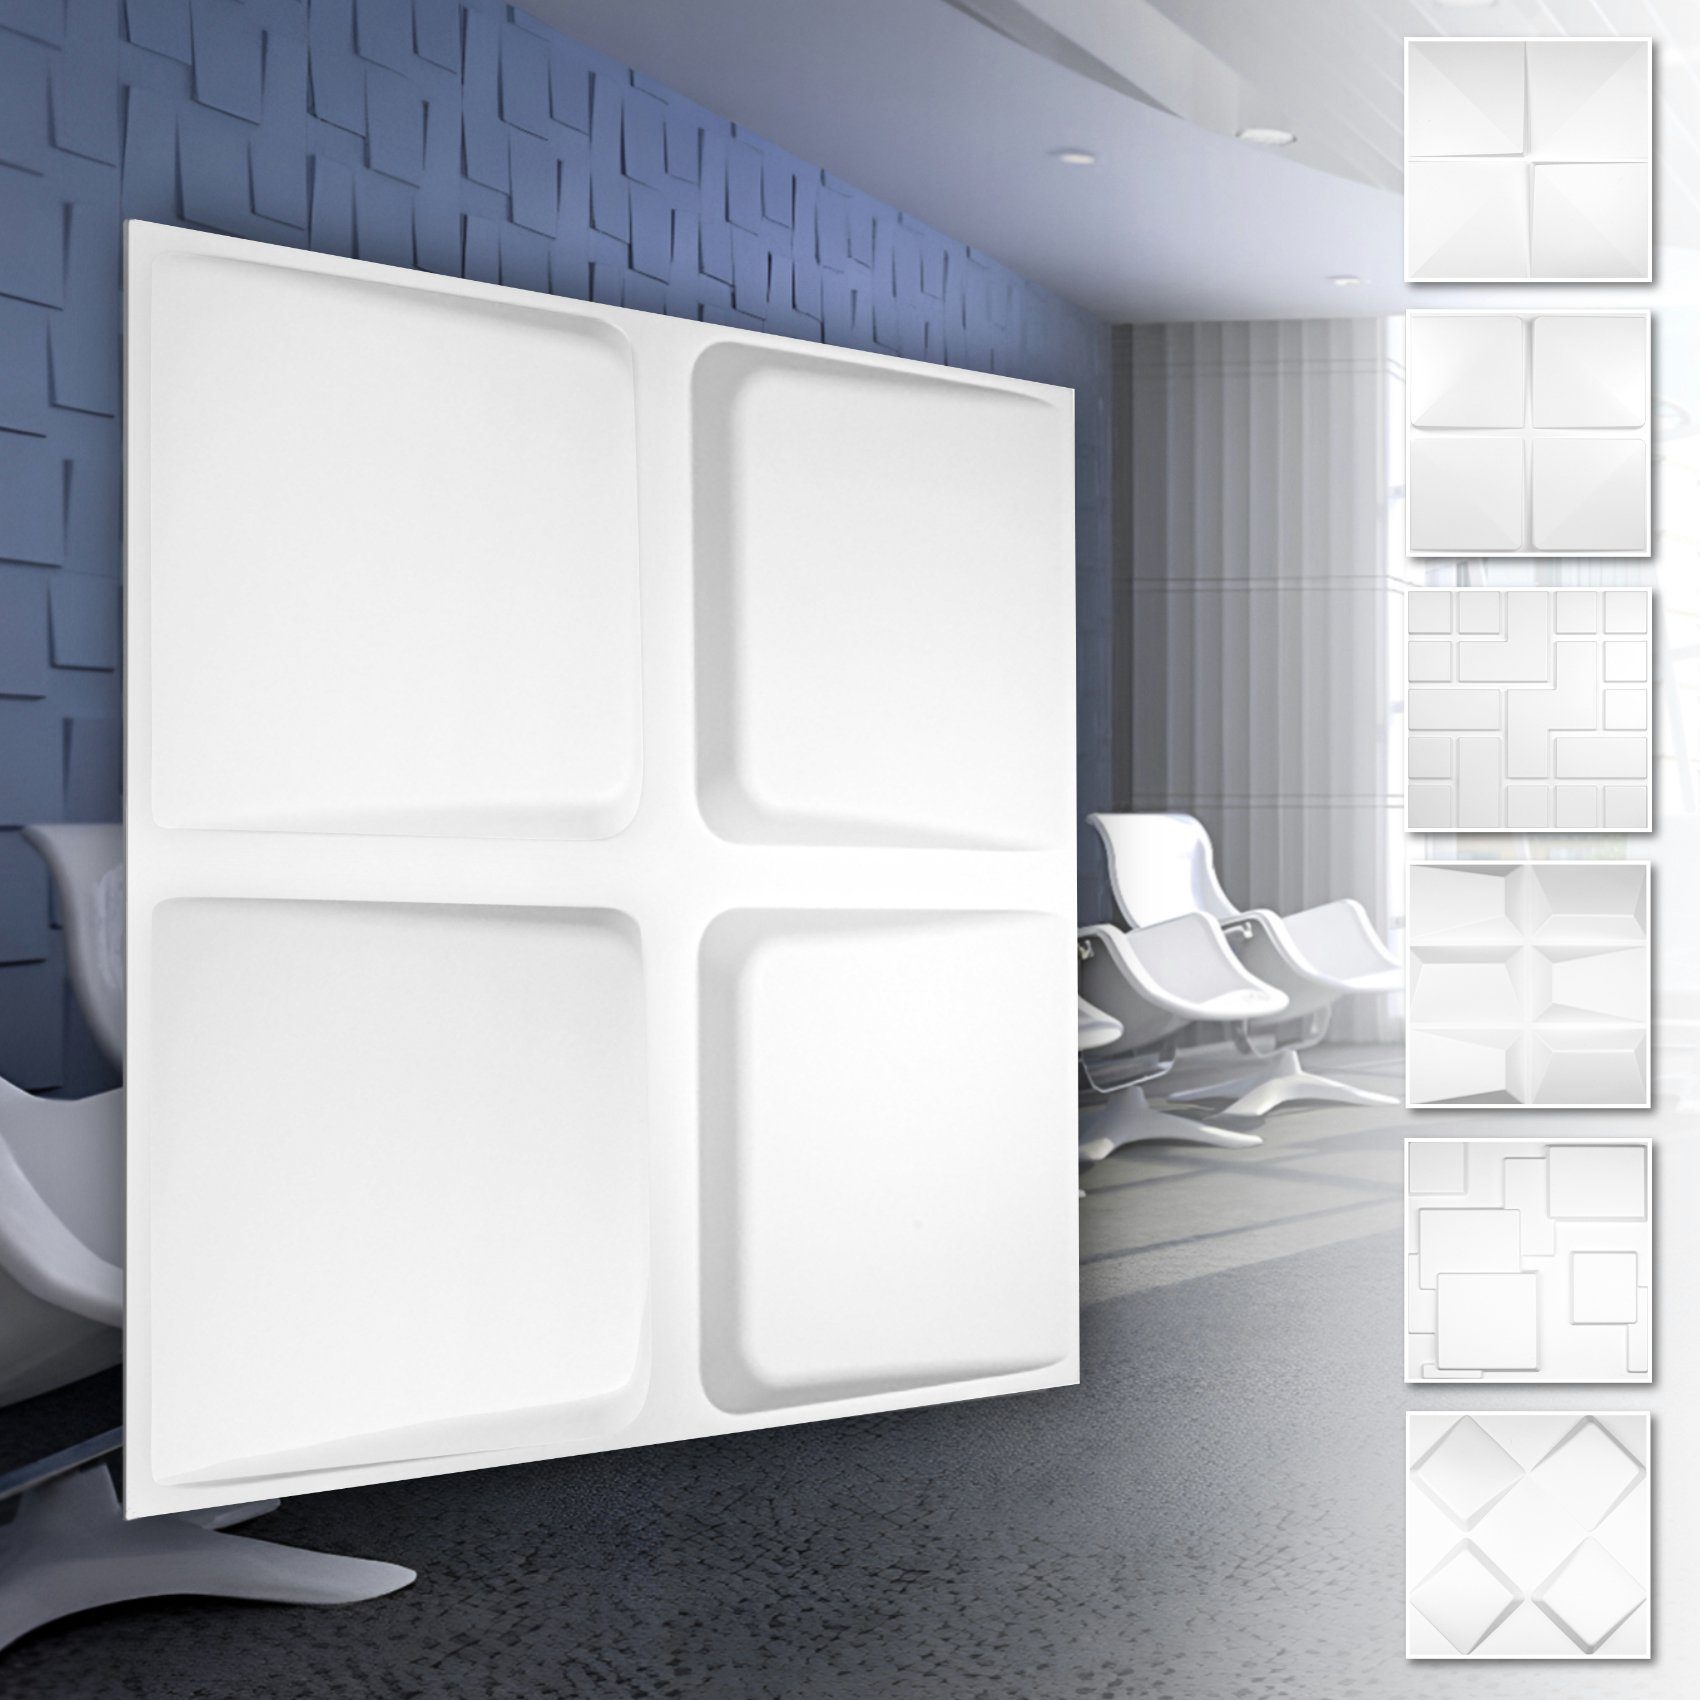 - - 3D HD011 1 Wanddekor qm (0.25 Wohnzimmer) Optik Motive weiße Wandverkleidung mit Kunststoff Cube Wanddekoobjekt Platte) Hexim (PVC